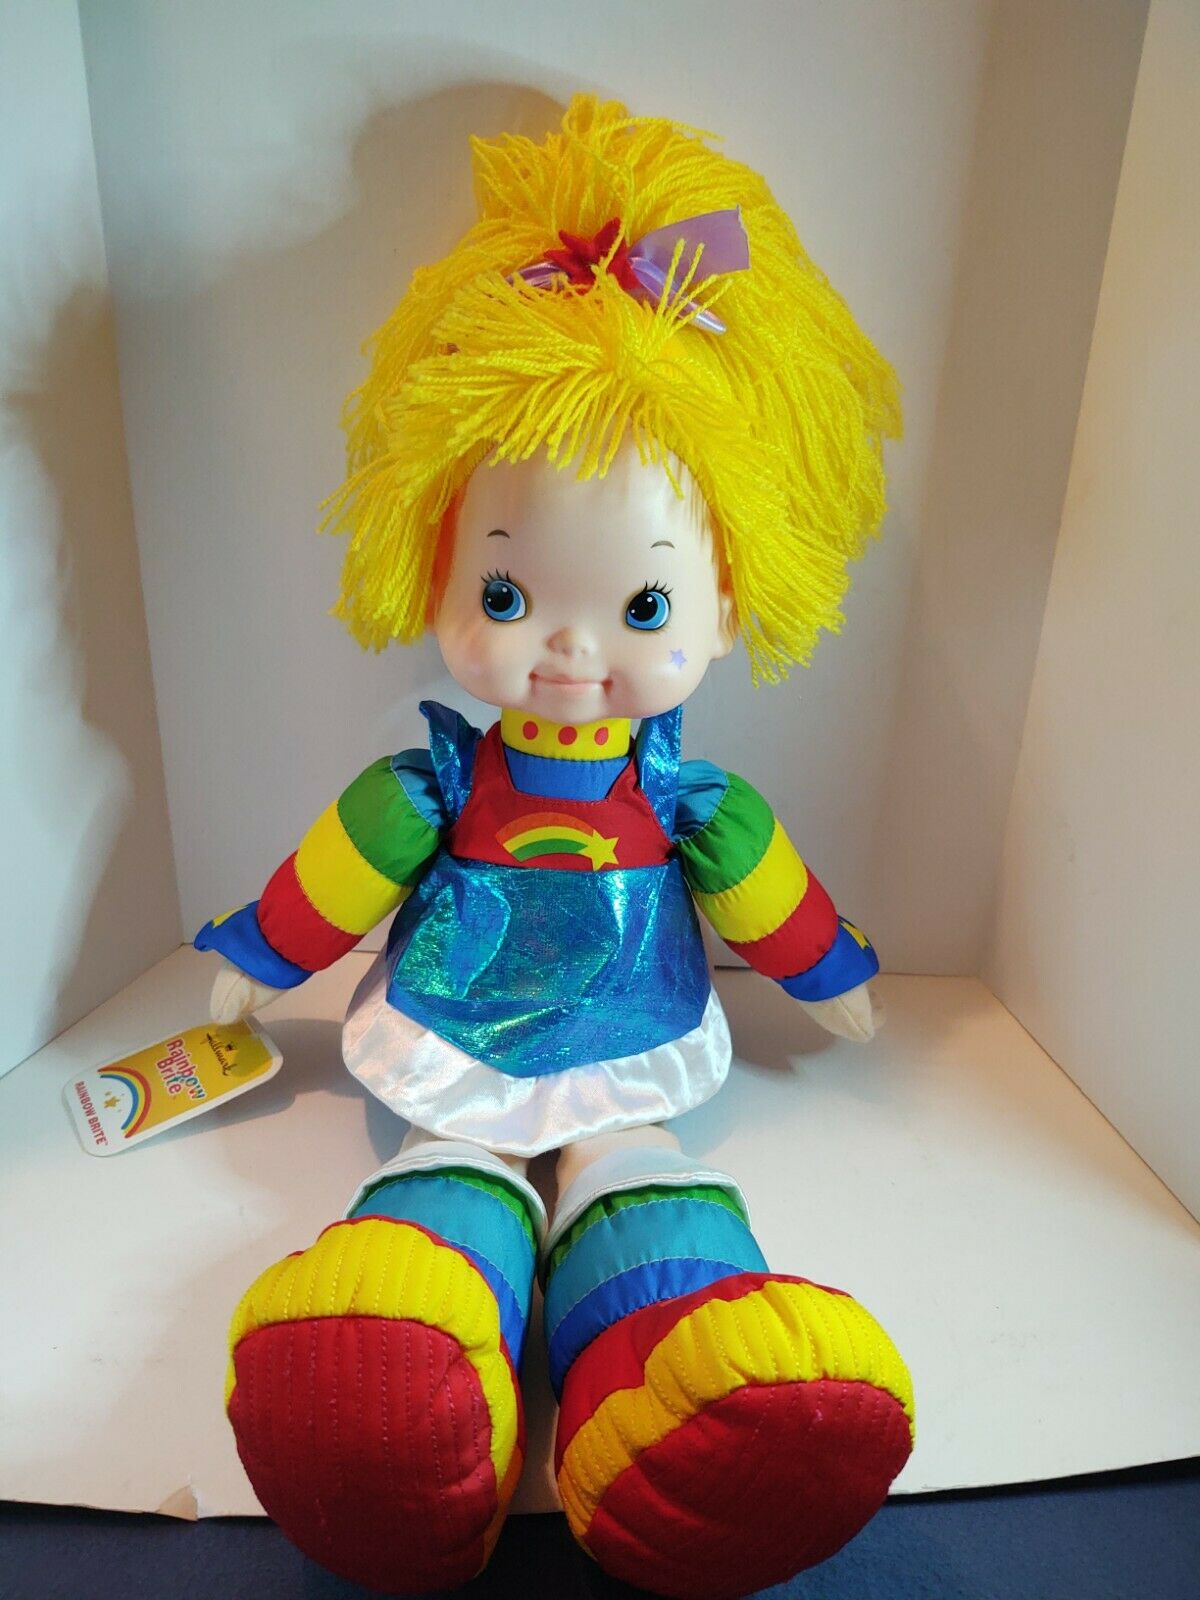 Rainbow Brite Doll Classic 17” Hallmark Exclusive Rare Plush With Tag!